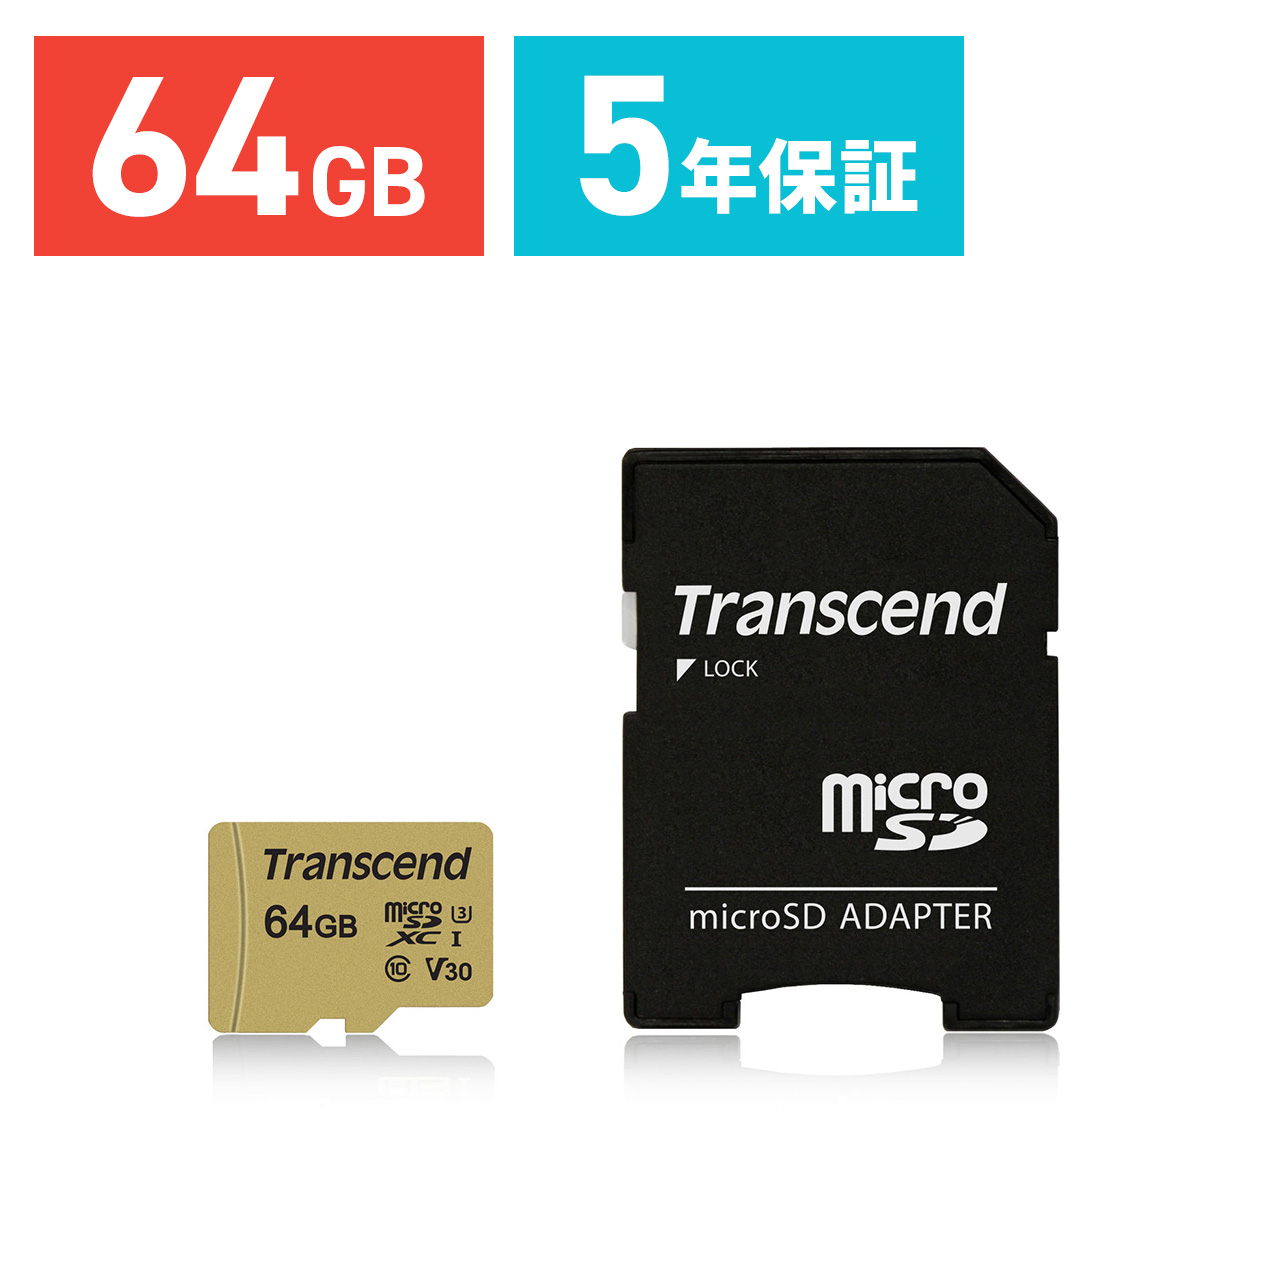 microSDXCJ[h 64GB Class10 UHS-I U3 V30 Nintendo SwitchΉ Transcend TS64GUSD500S